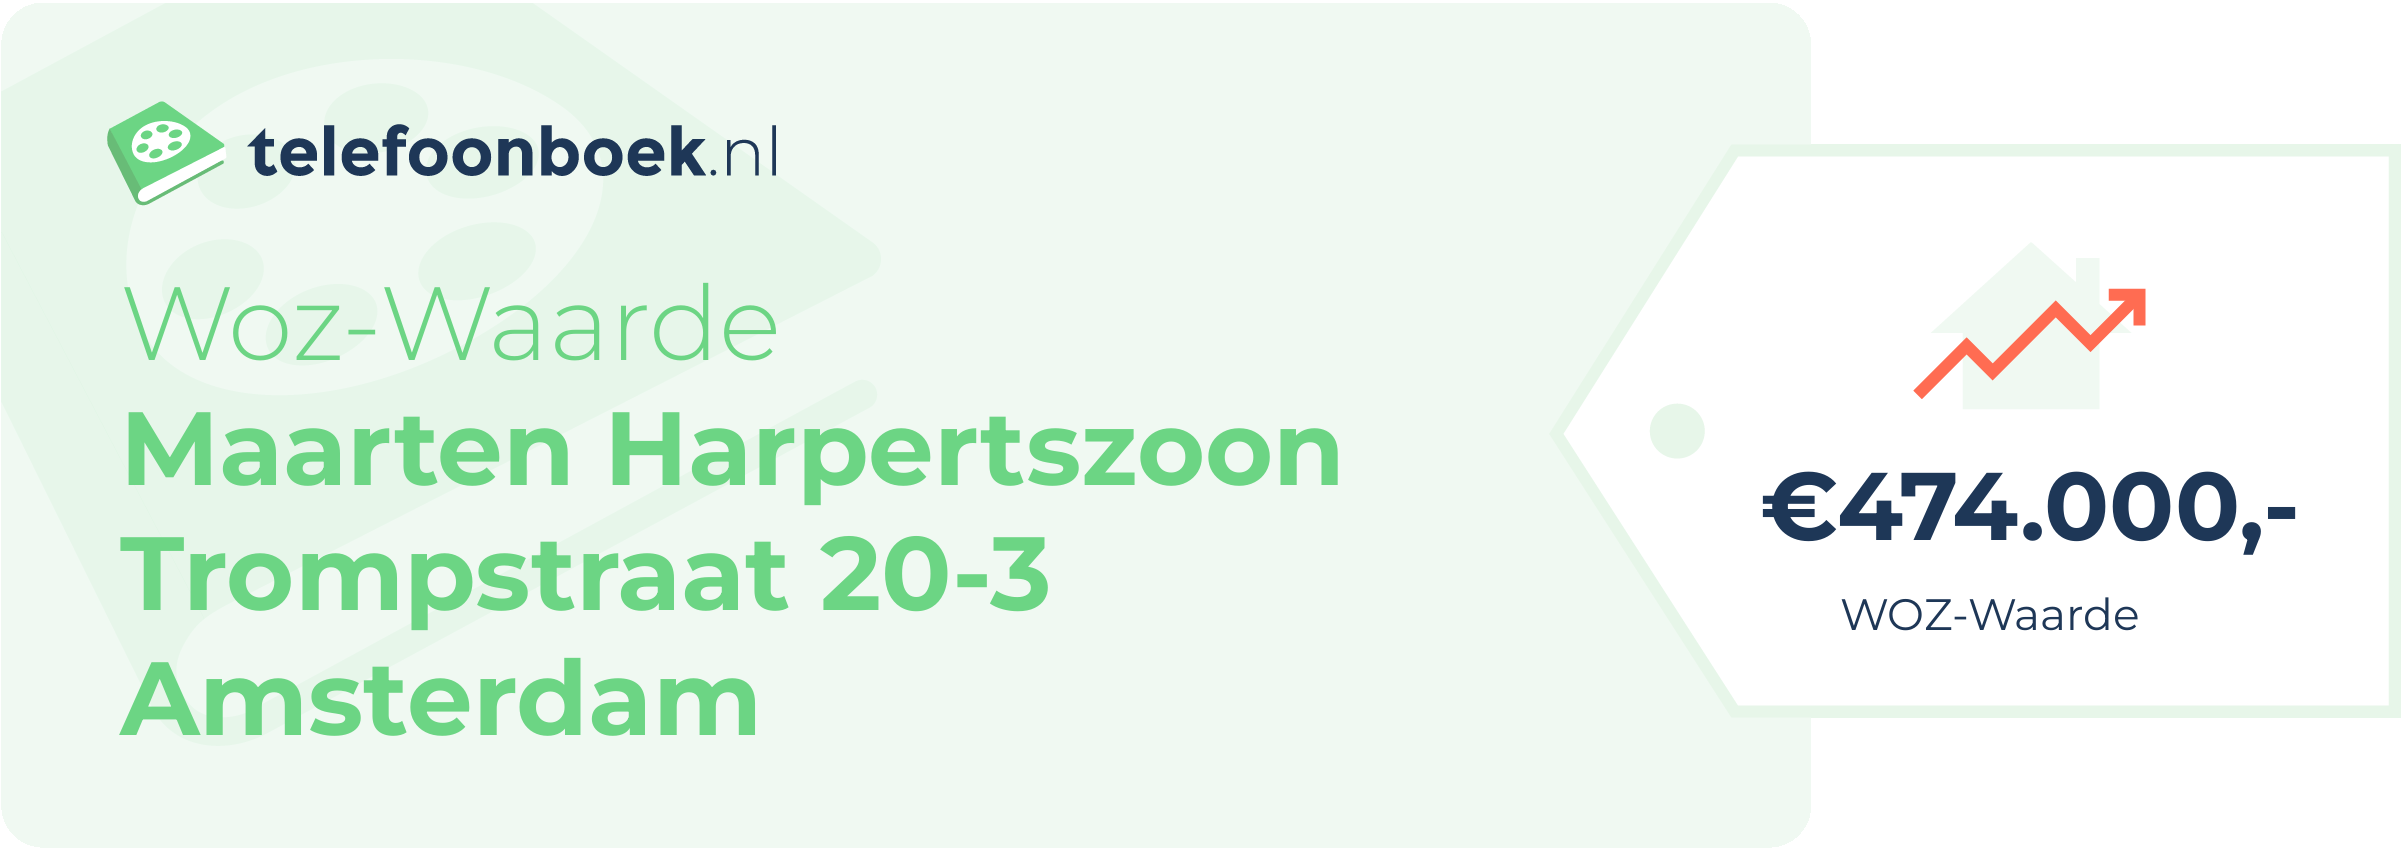 WOZ-waarde Maarten Harpertszoon Trompstraat 20-3 Amsterdam